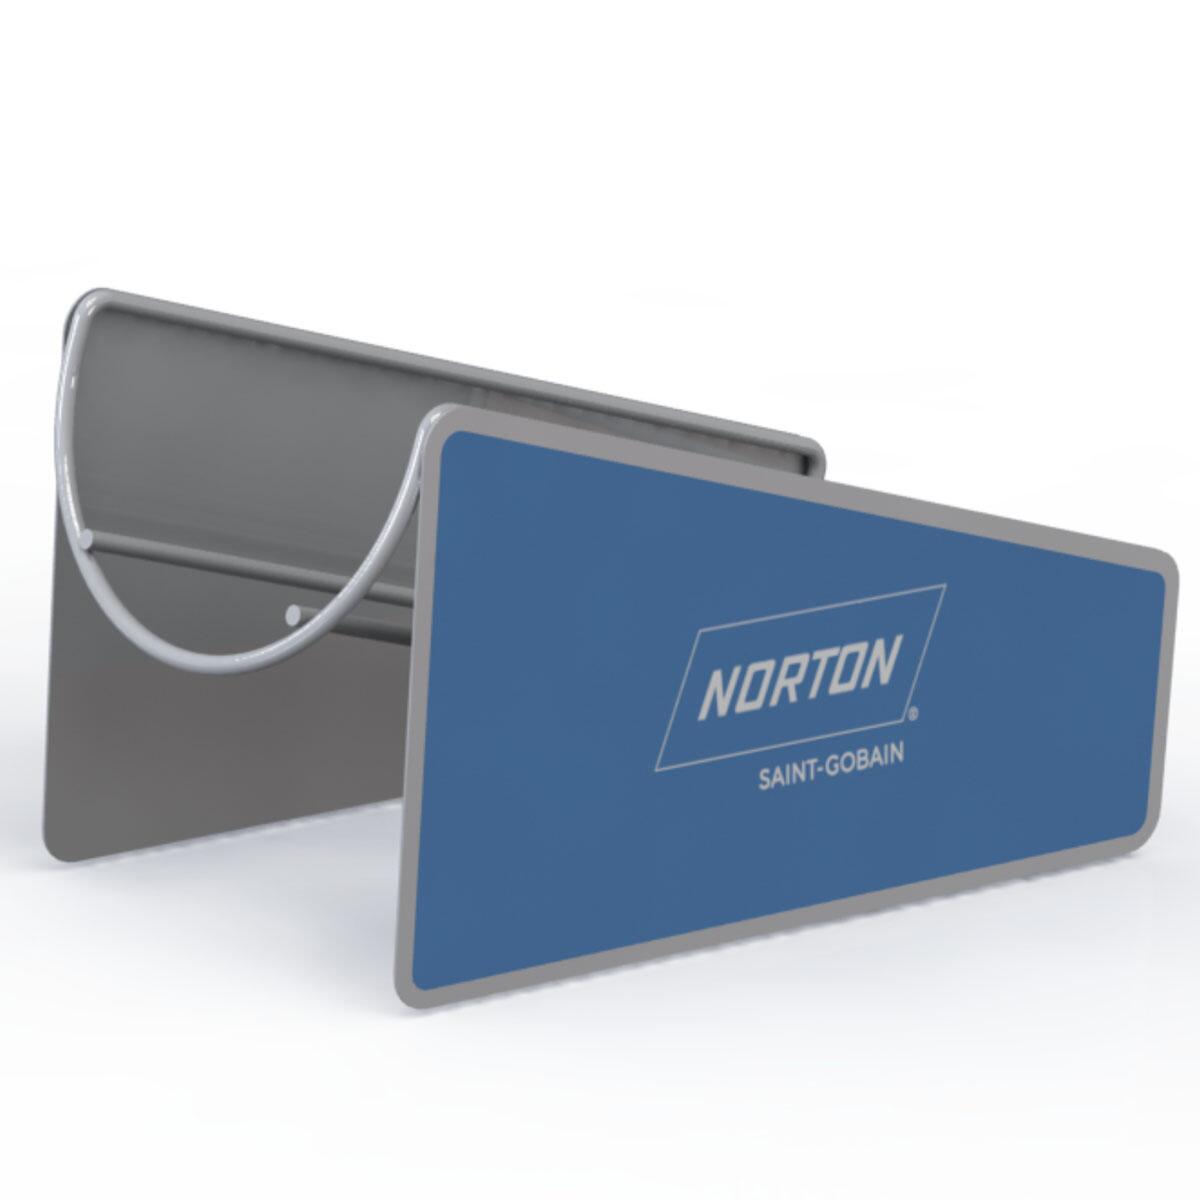 Display de Balcão para Produtos Circulares Aramados Norton